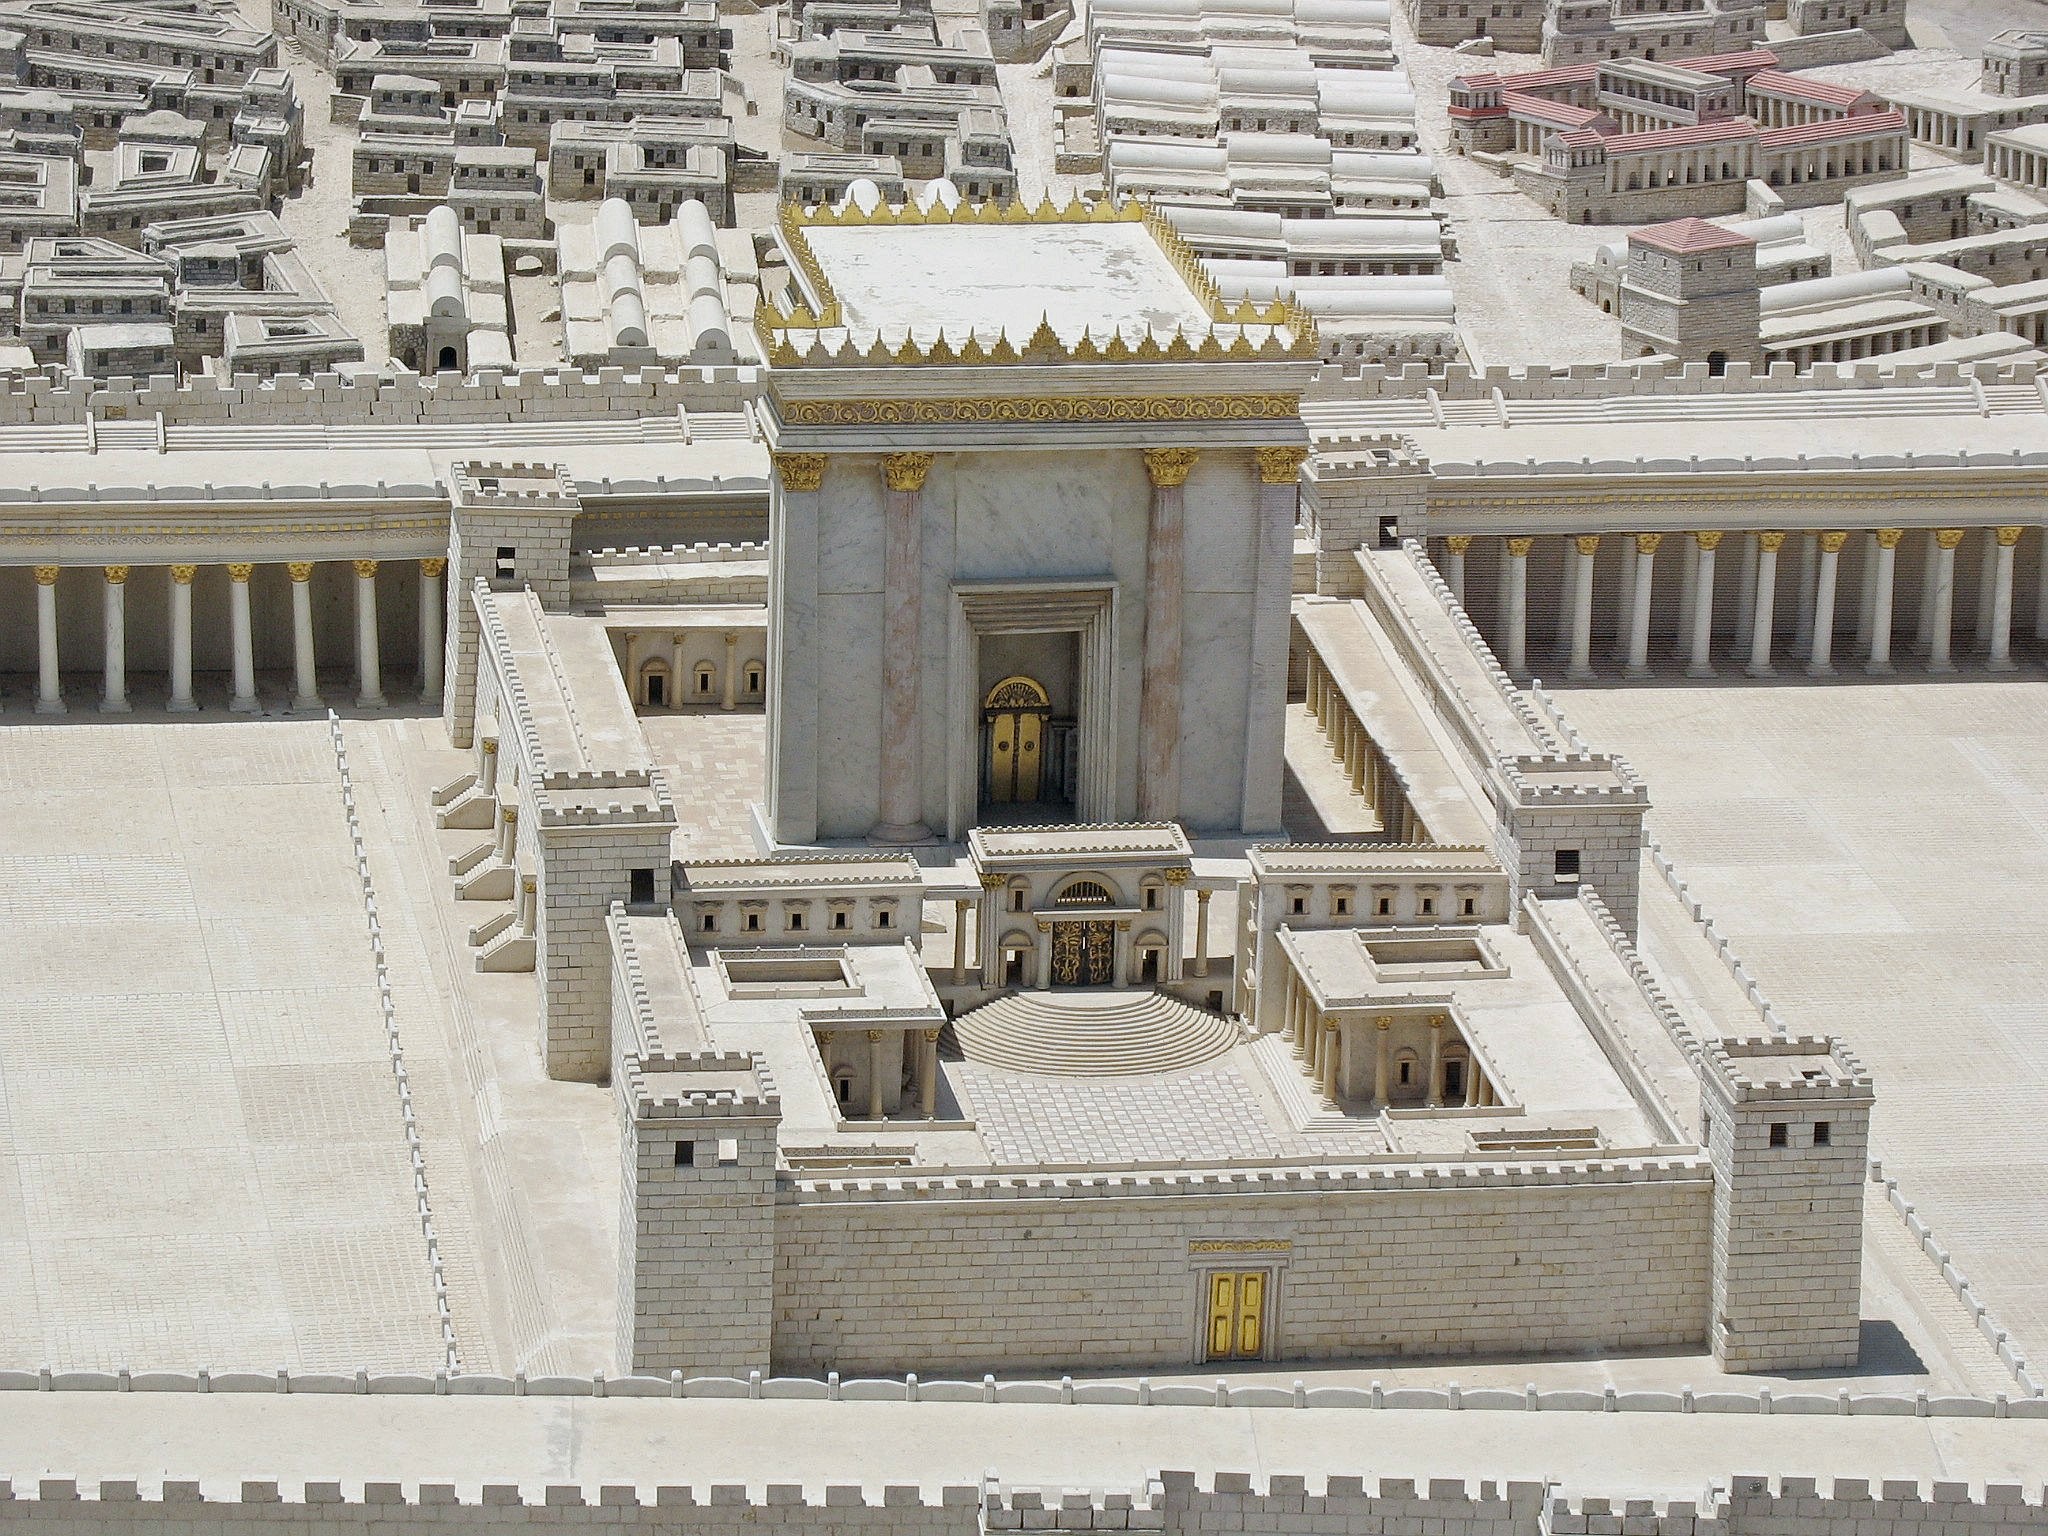 Rebuilding the Temple